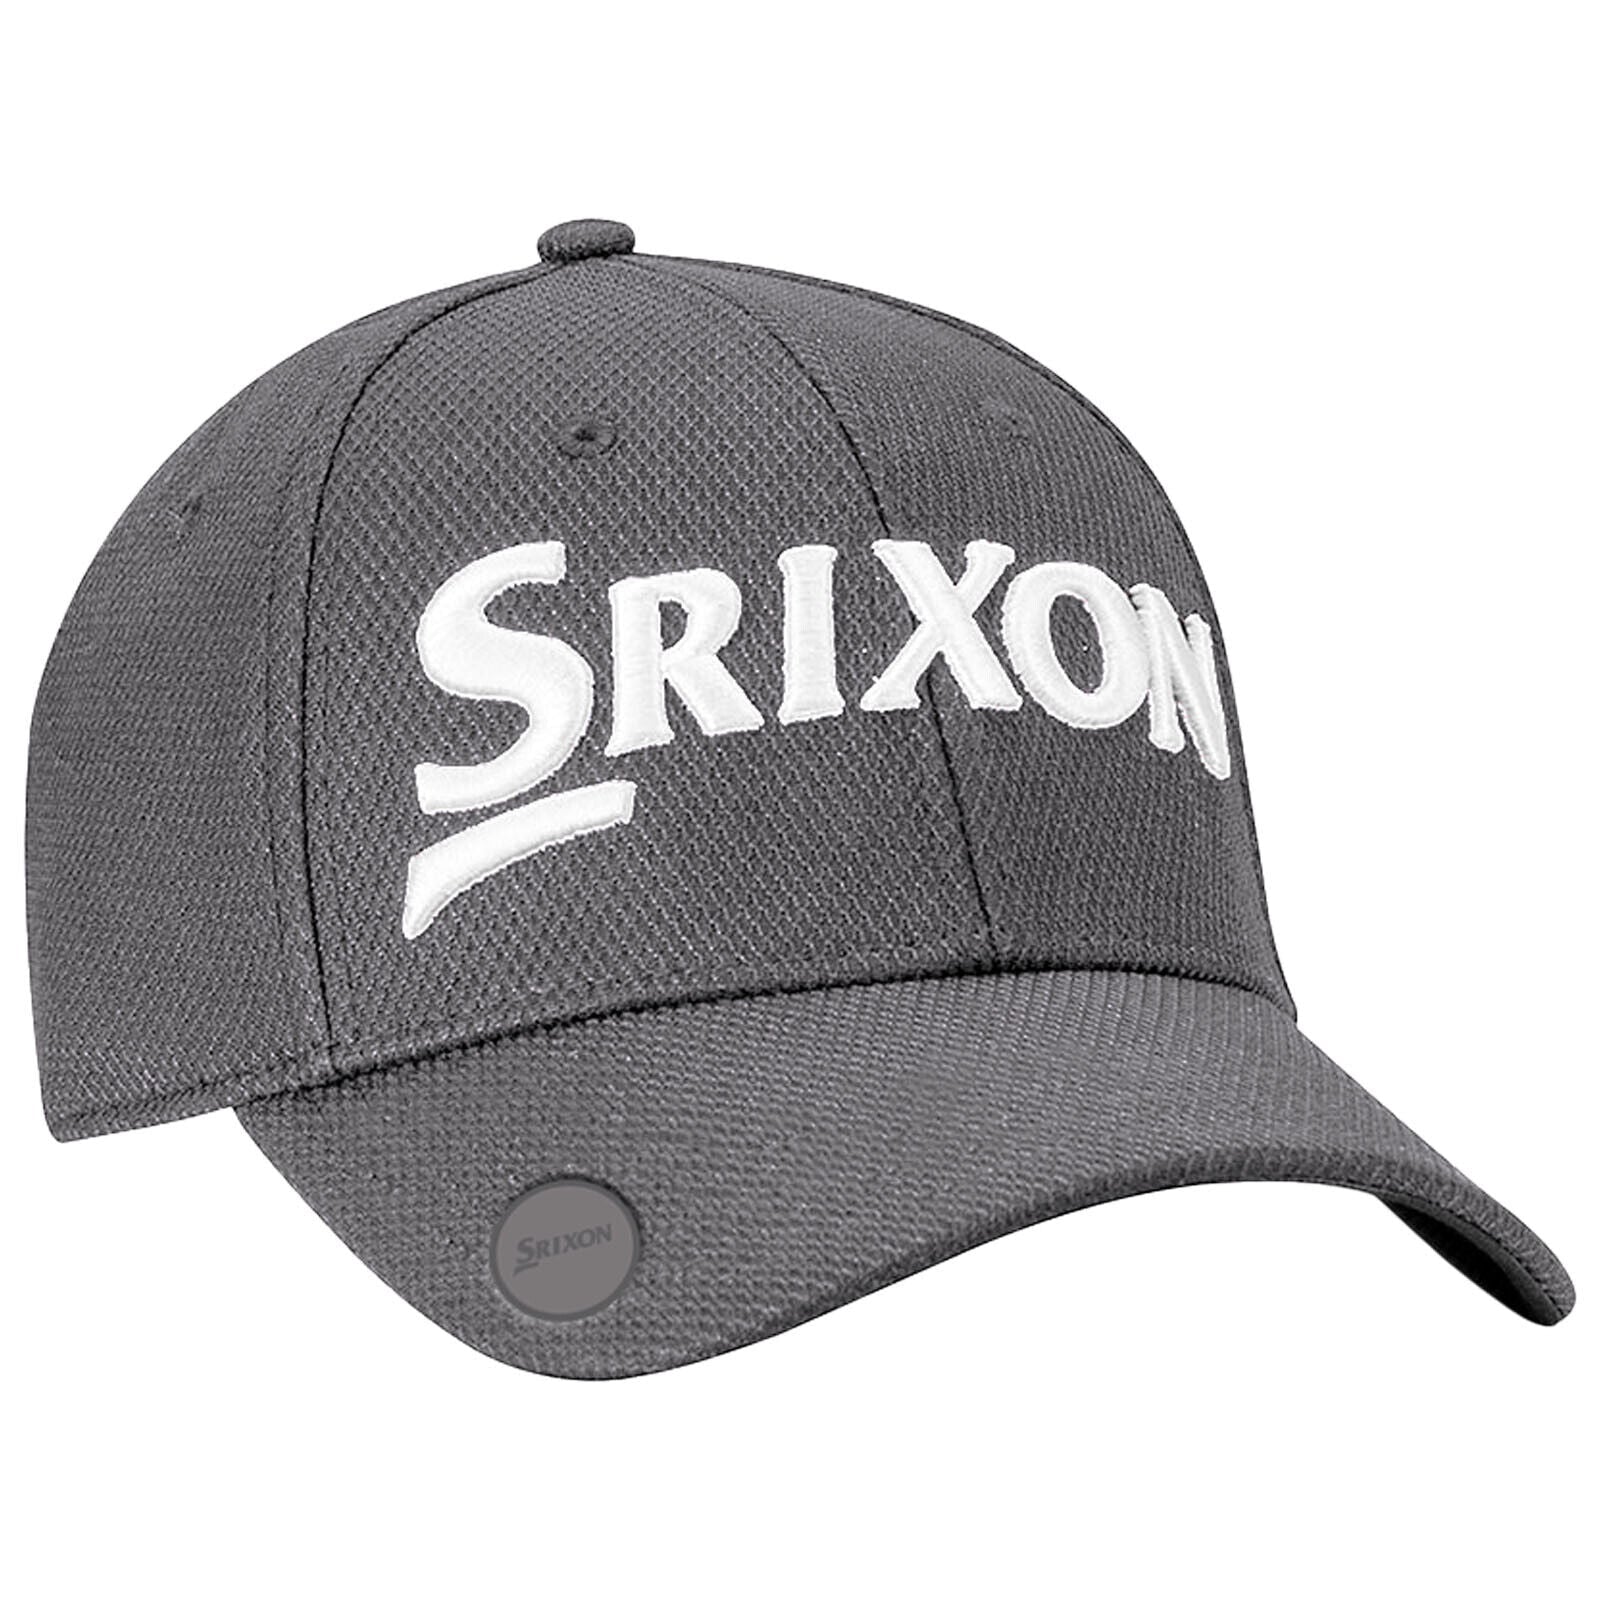 Srixon Ball Marker Golf Cap 121271